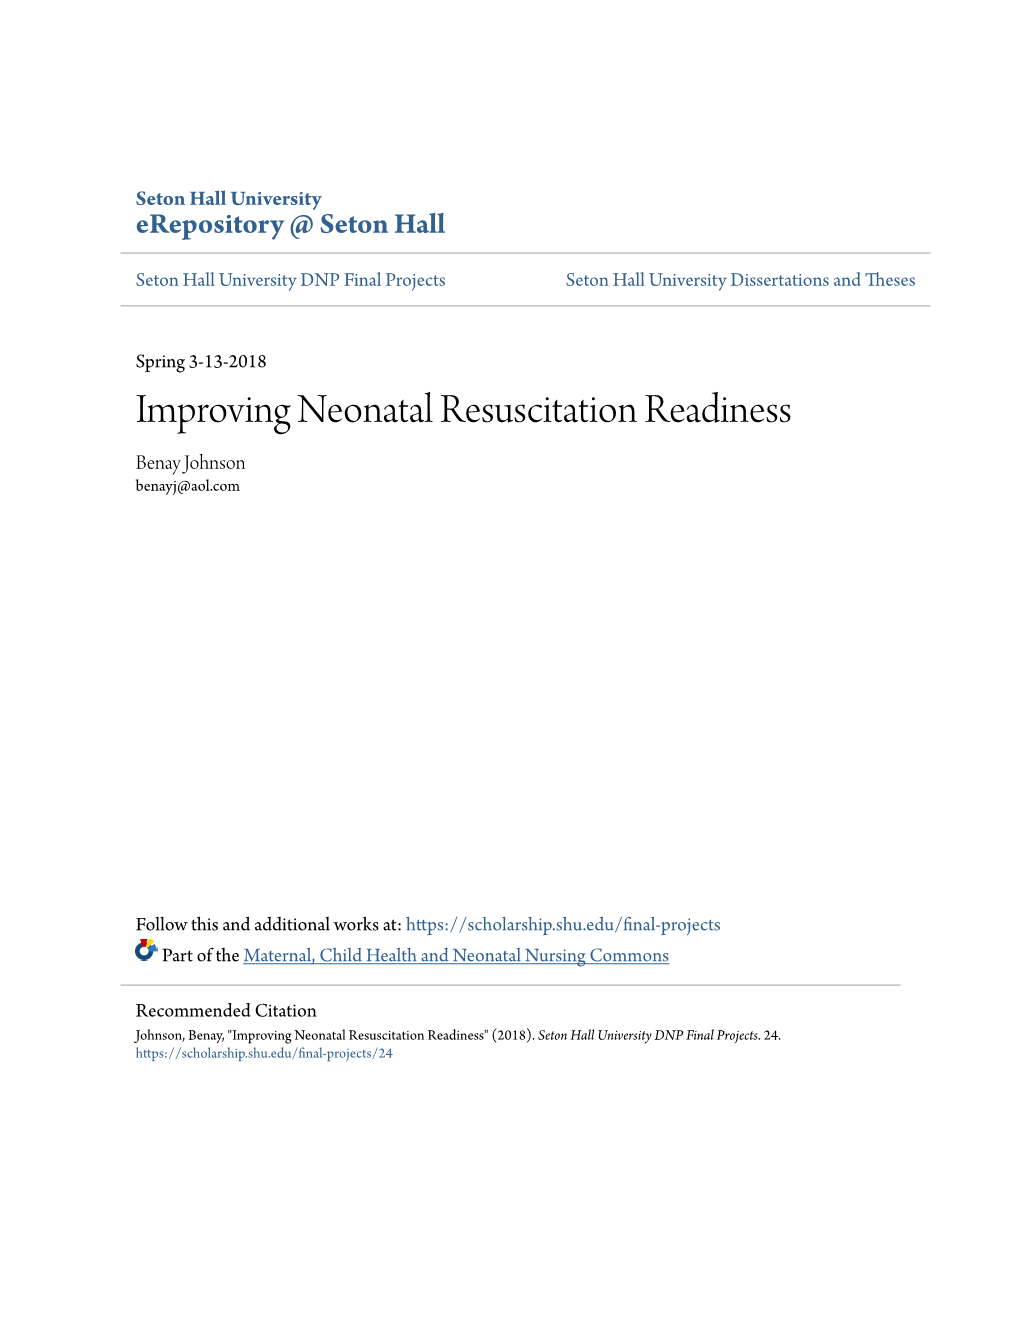 Improving Neonatal Resuscitation Readiness Benay Johnson Benayj@Aol.Com